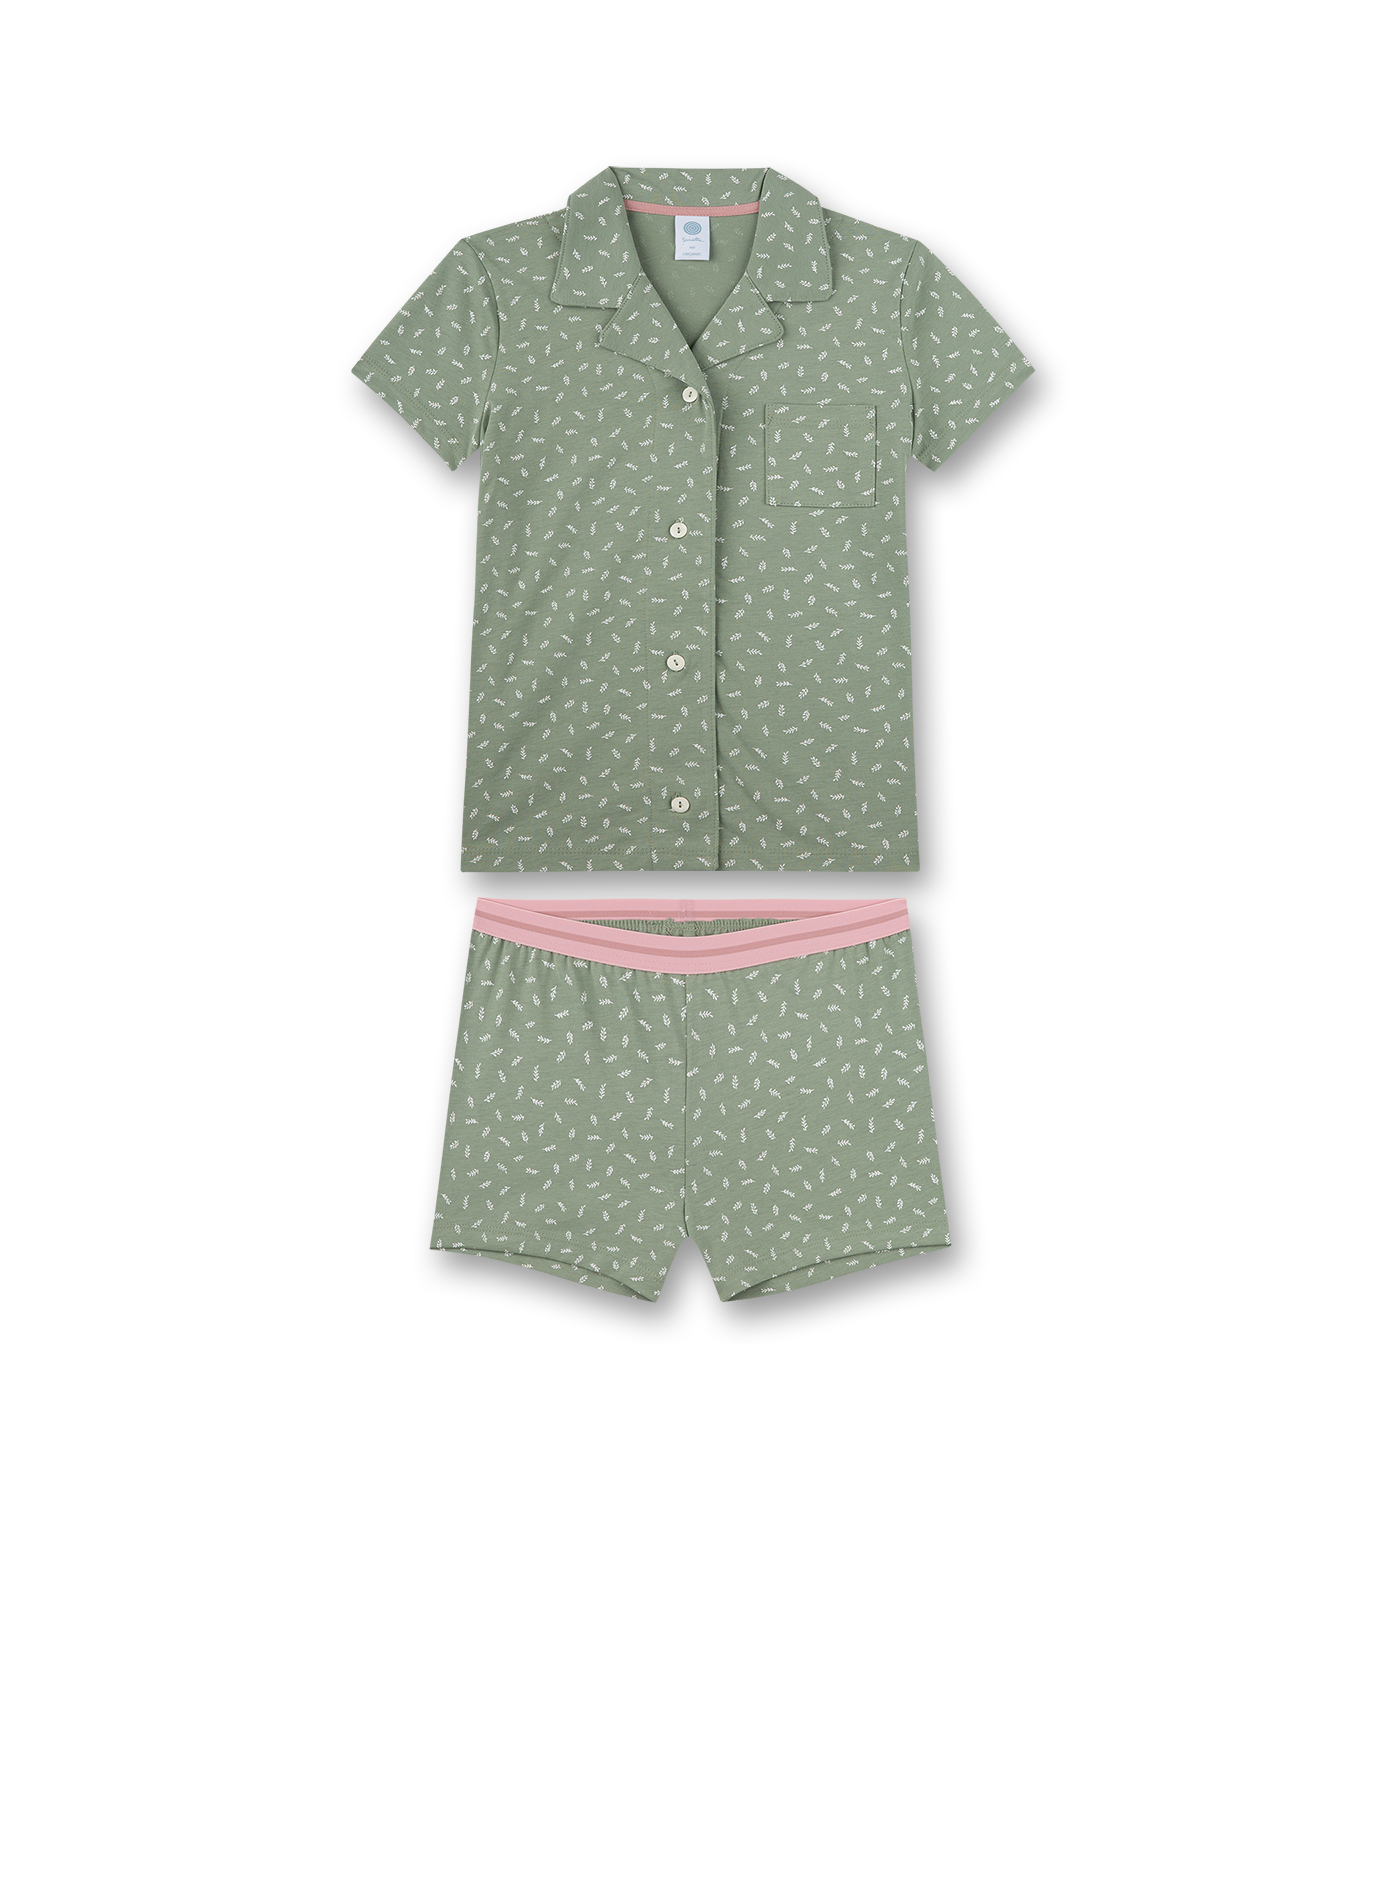 Mädchen-Schlafanzug kurz Grün